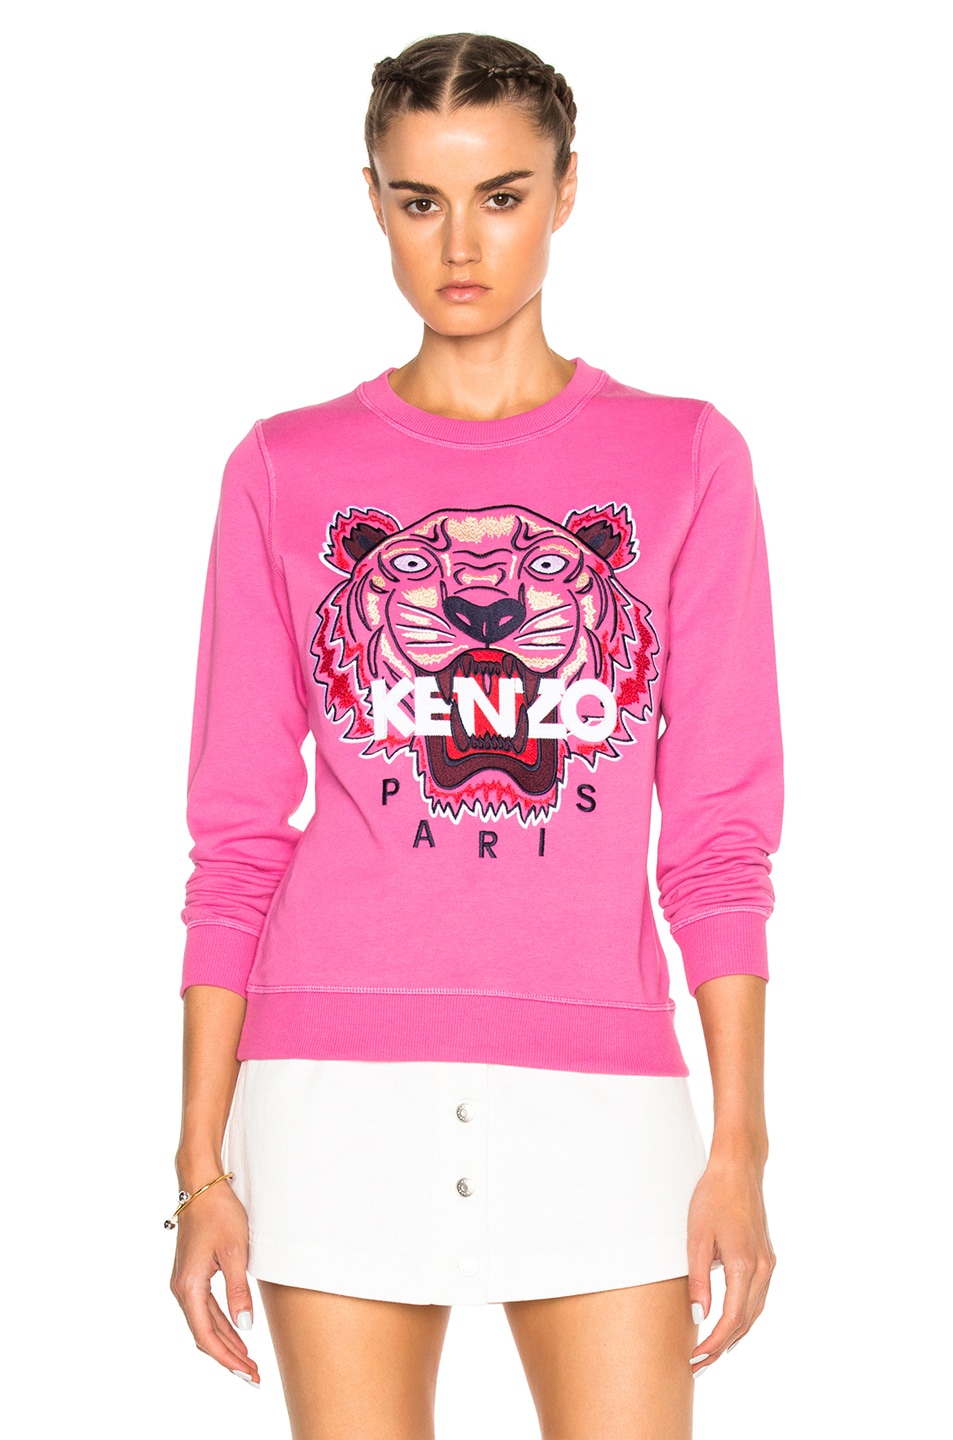 Kenzo Tiger Sweatshirt in Begonia | FWRD